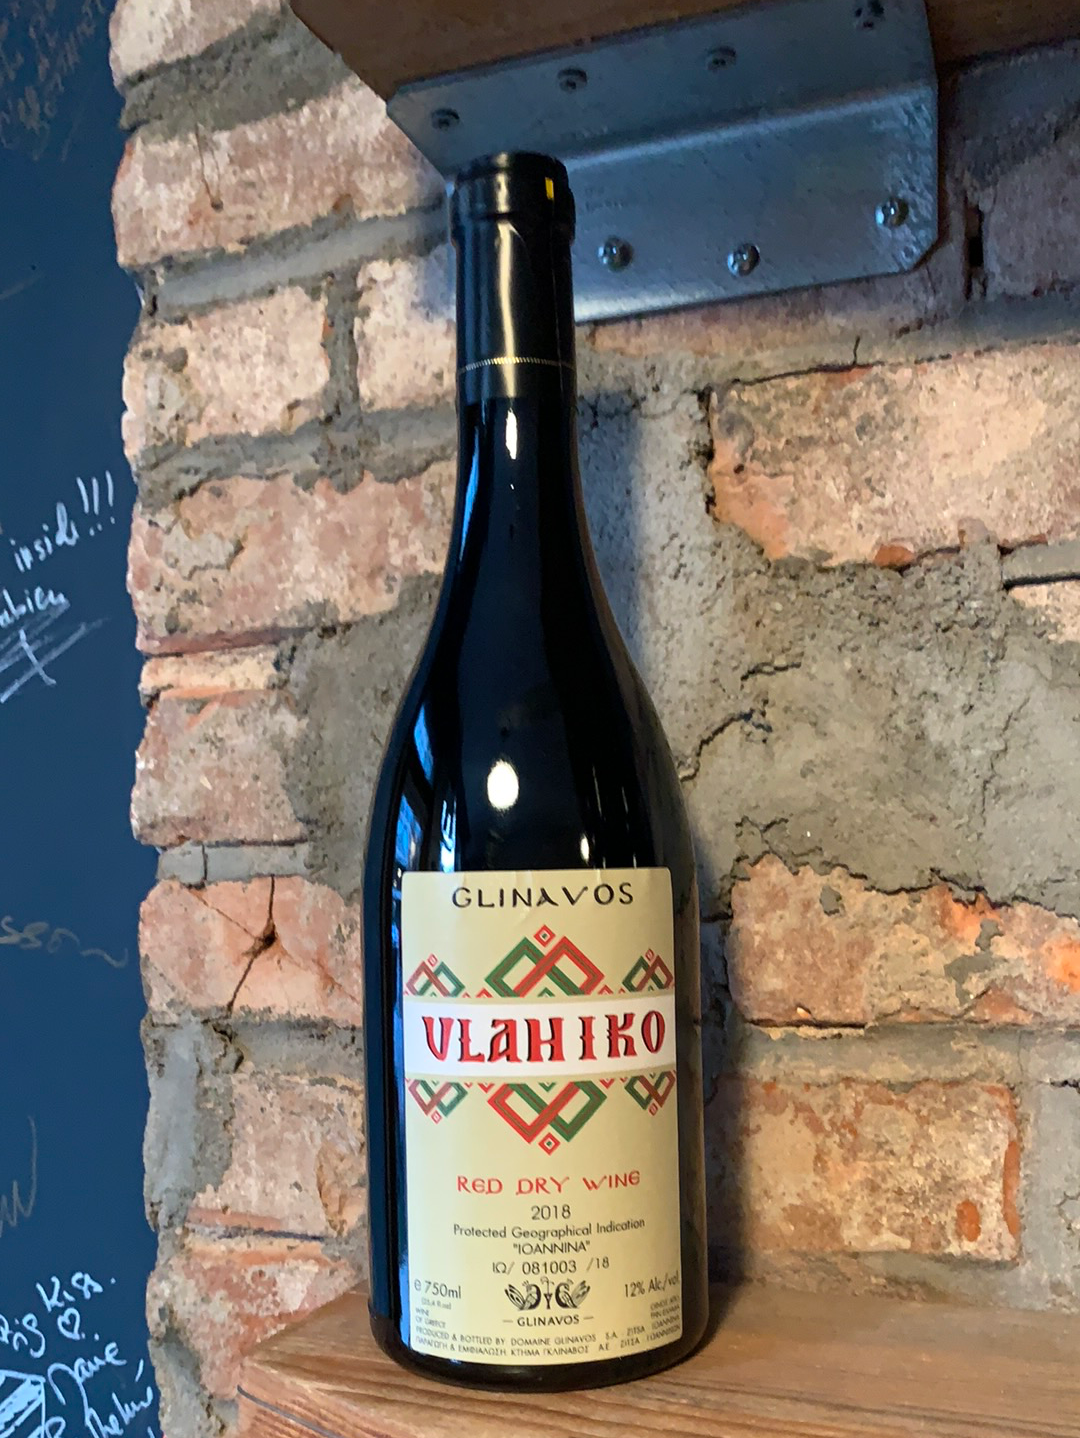 Glinavos "Vlahiko" Ioannina Red Dry Wine 2019